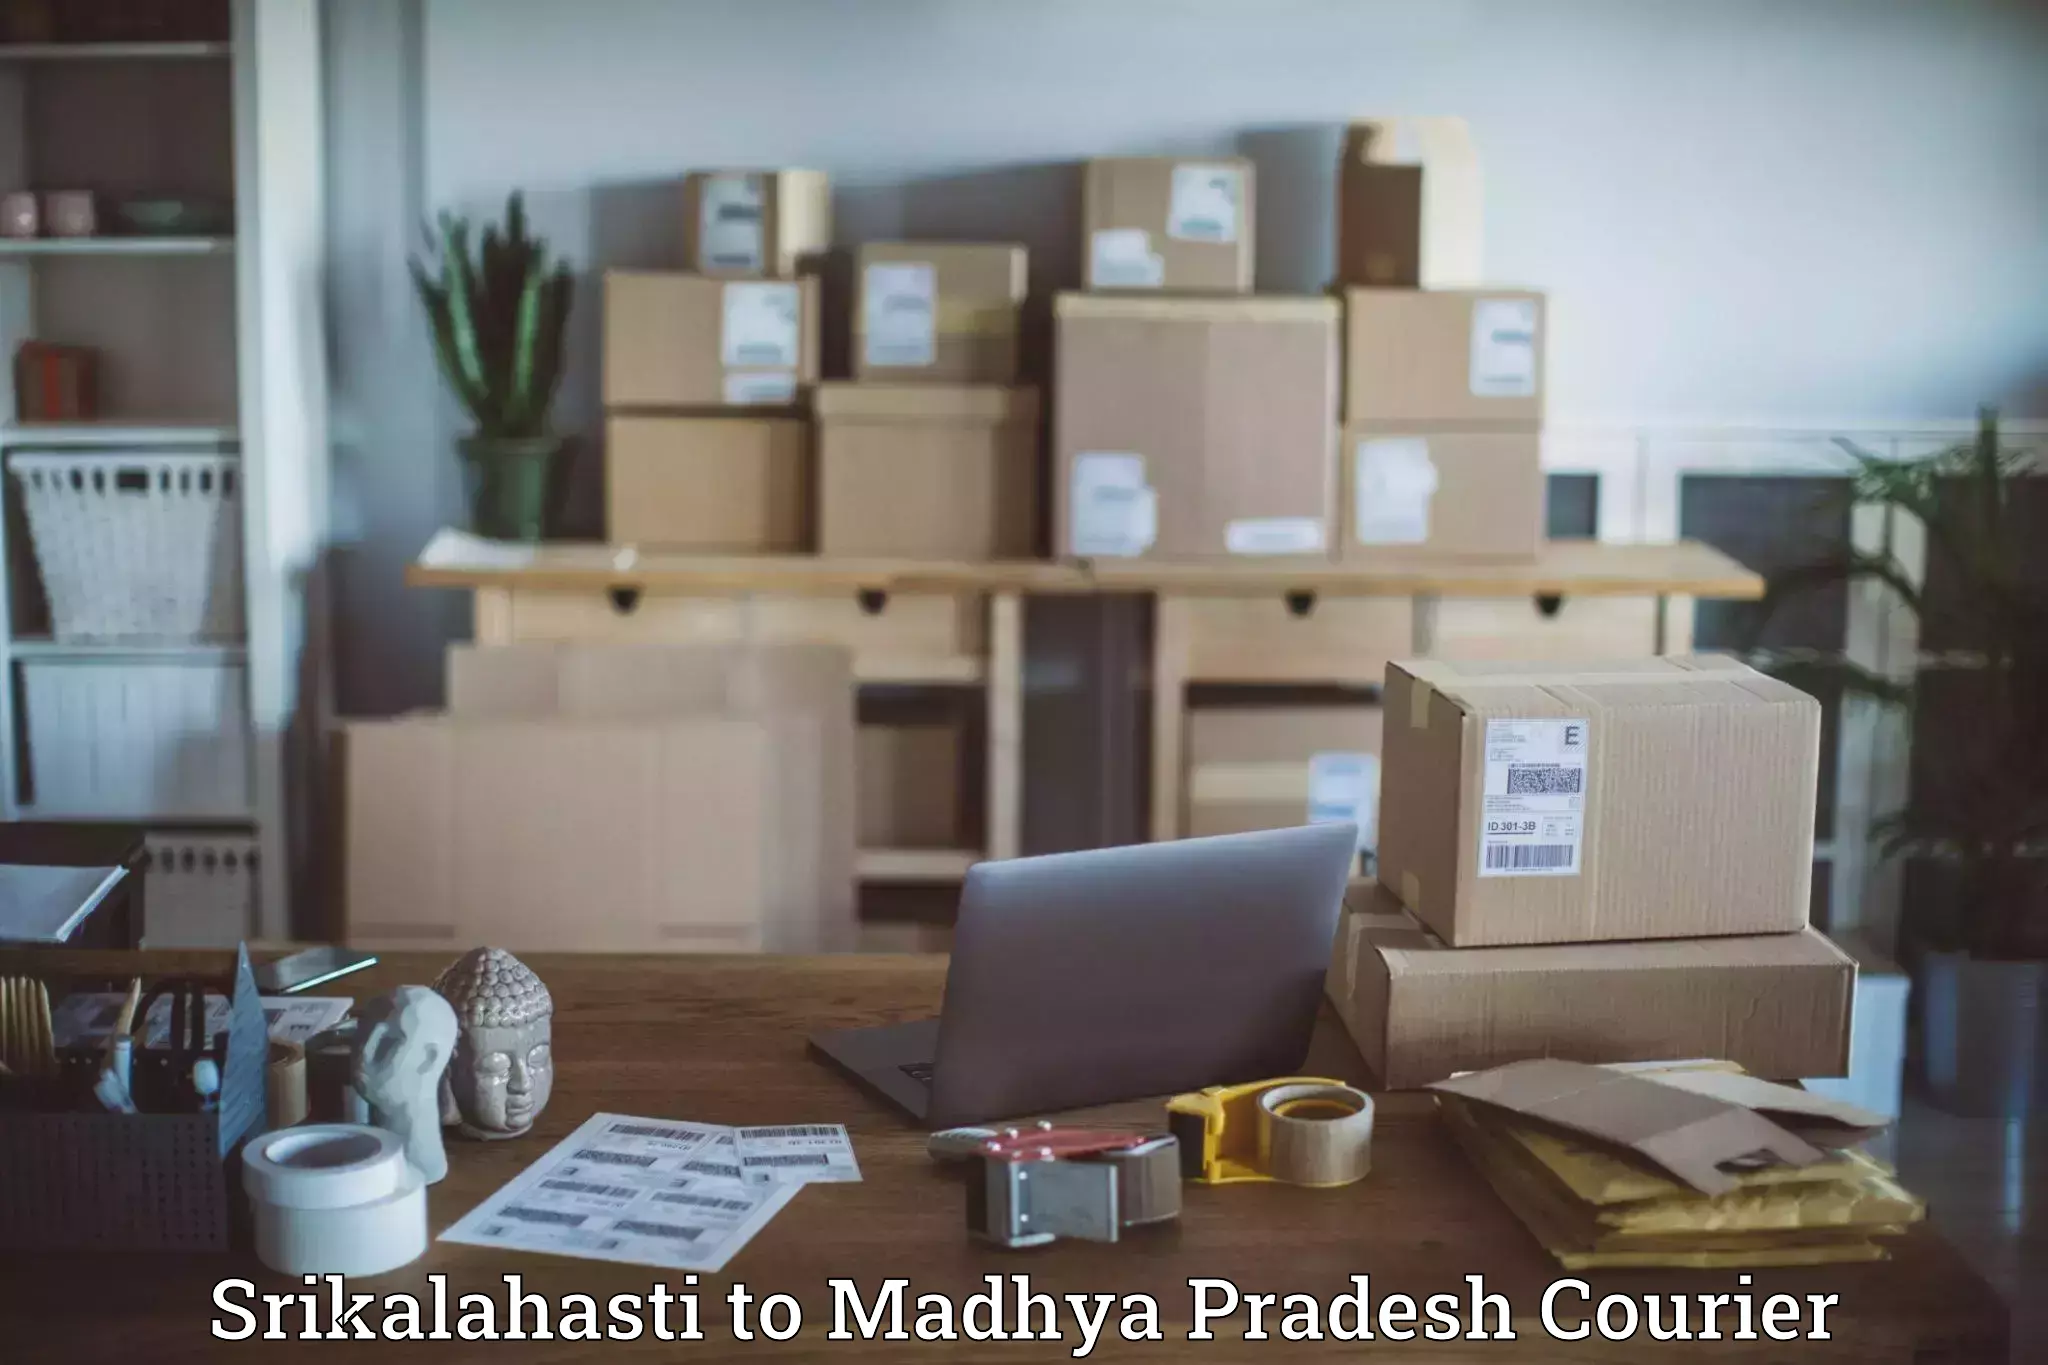 State-of-the-art courier technology Srikalahasti to Berasia